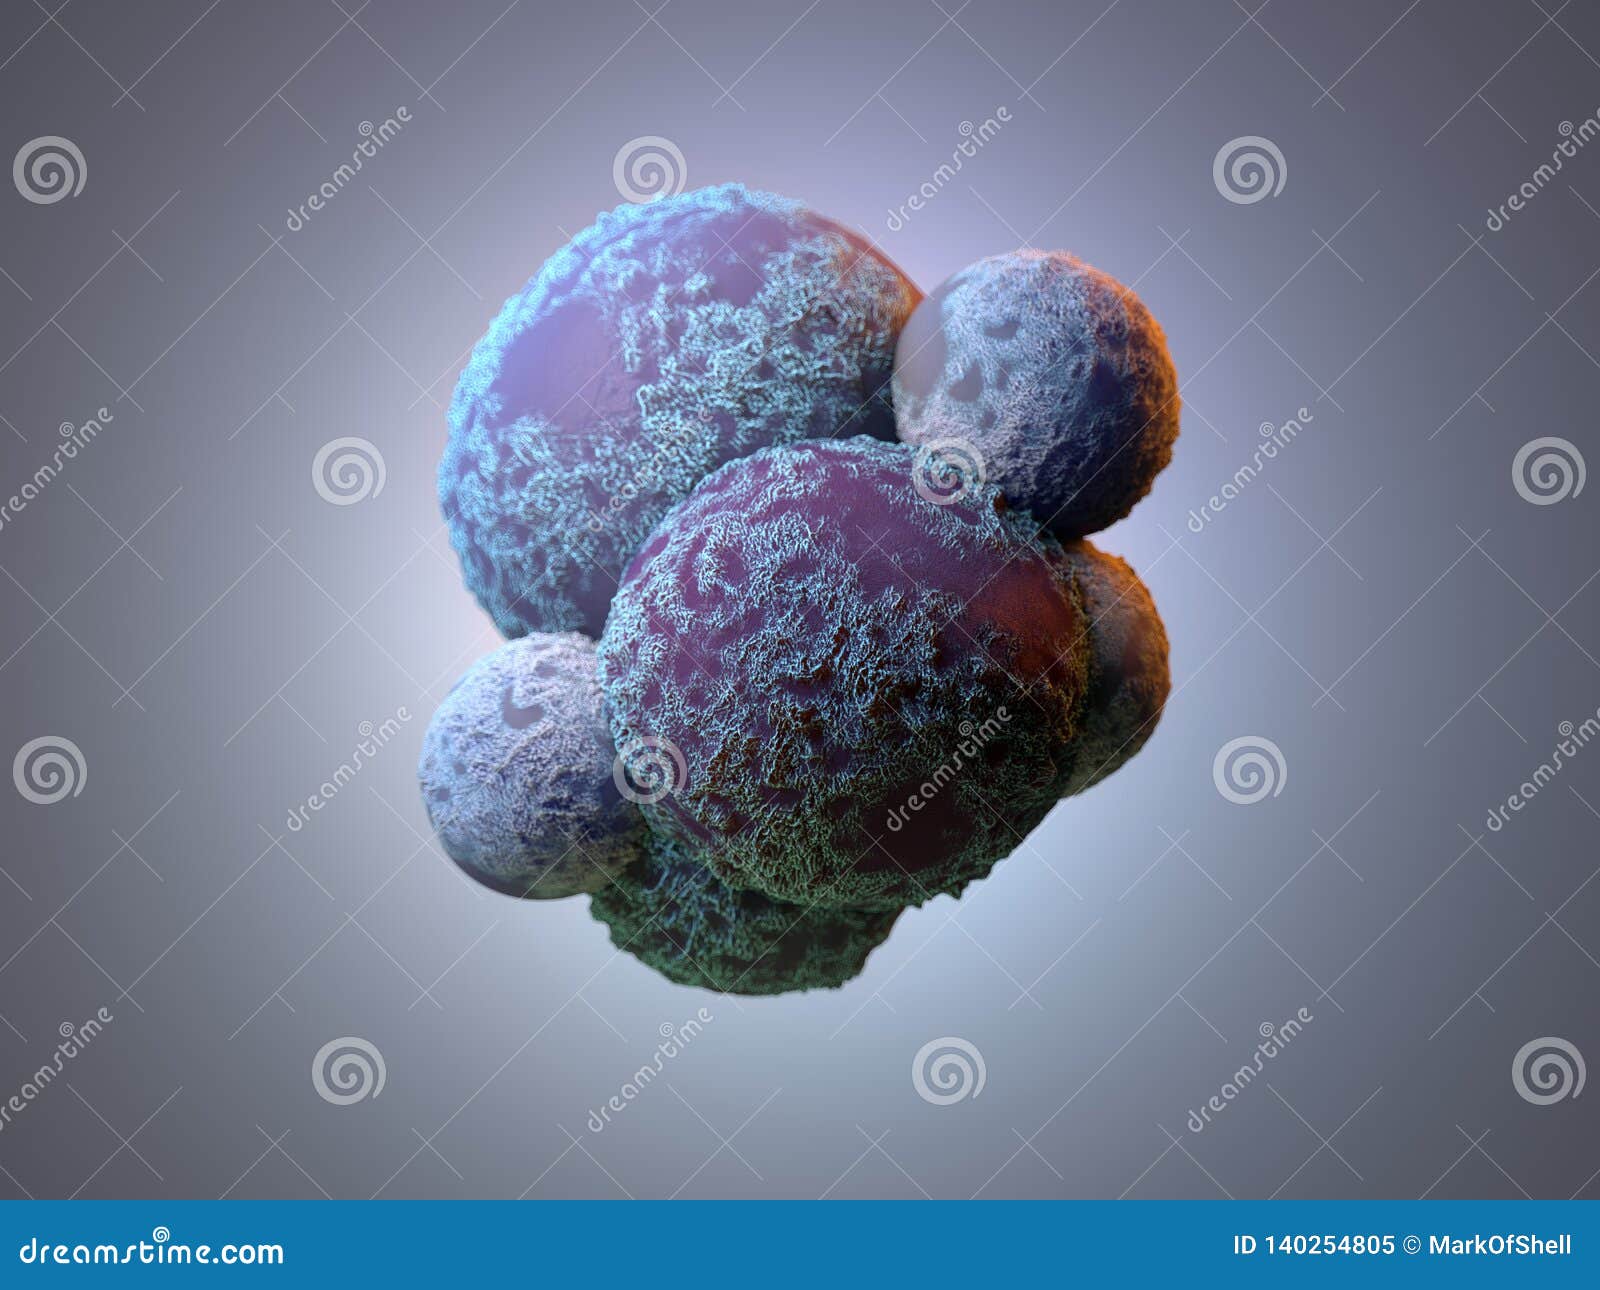 cancer cells damaged, dicky, morbid infected cells, 3d render